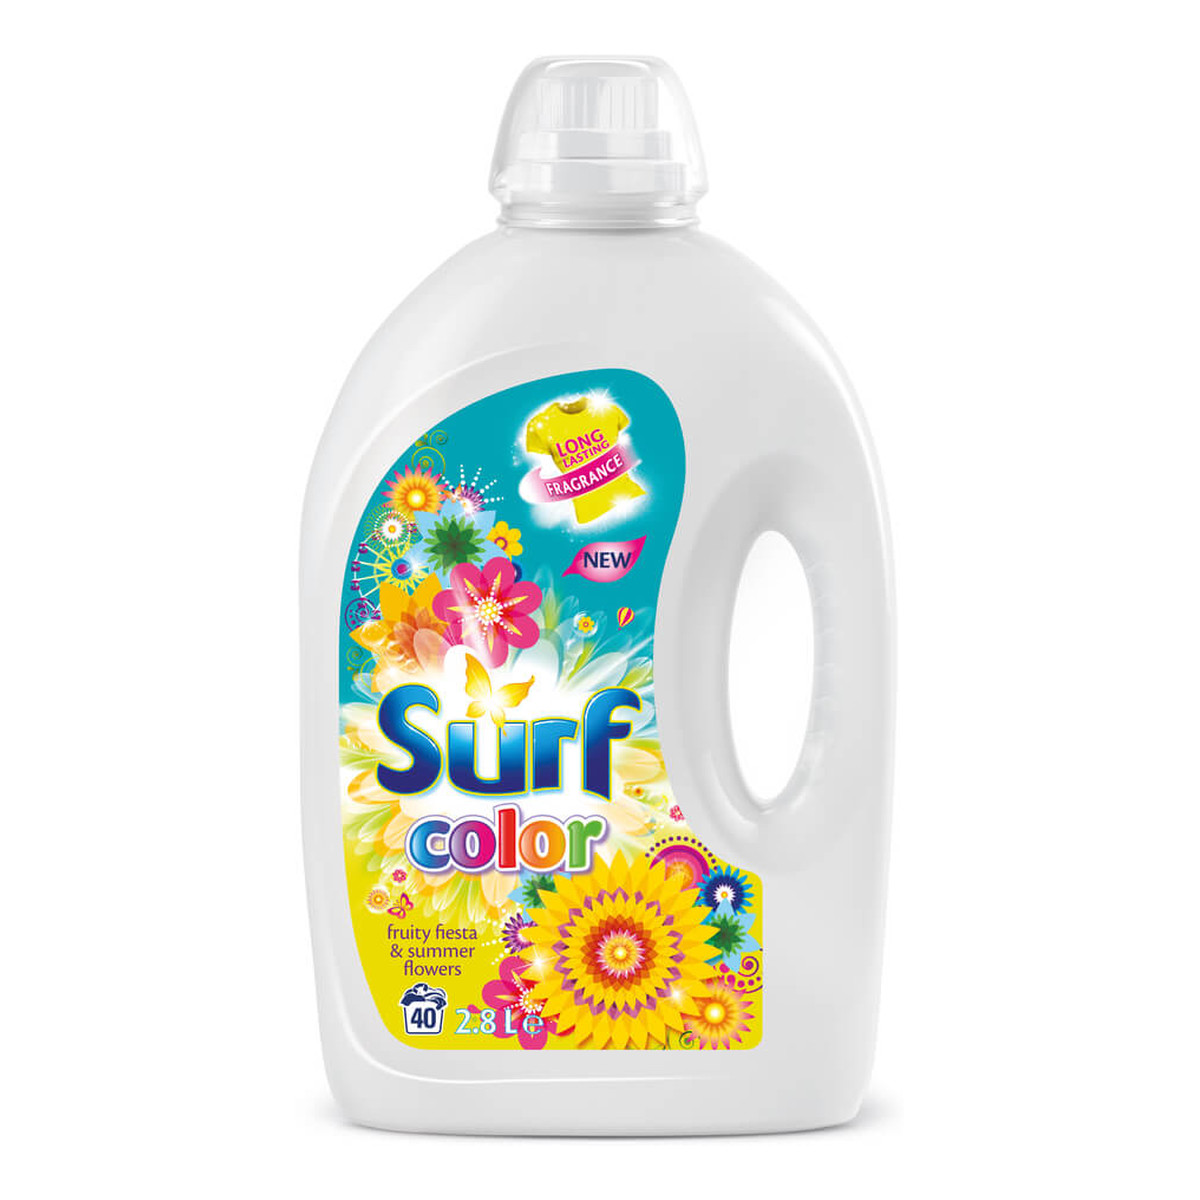 Surf Color Fruity Fiesta & Summer Flowers Płyn do prania (40 prań) 2800ml